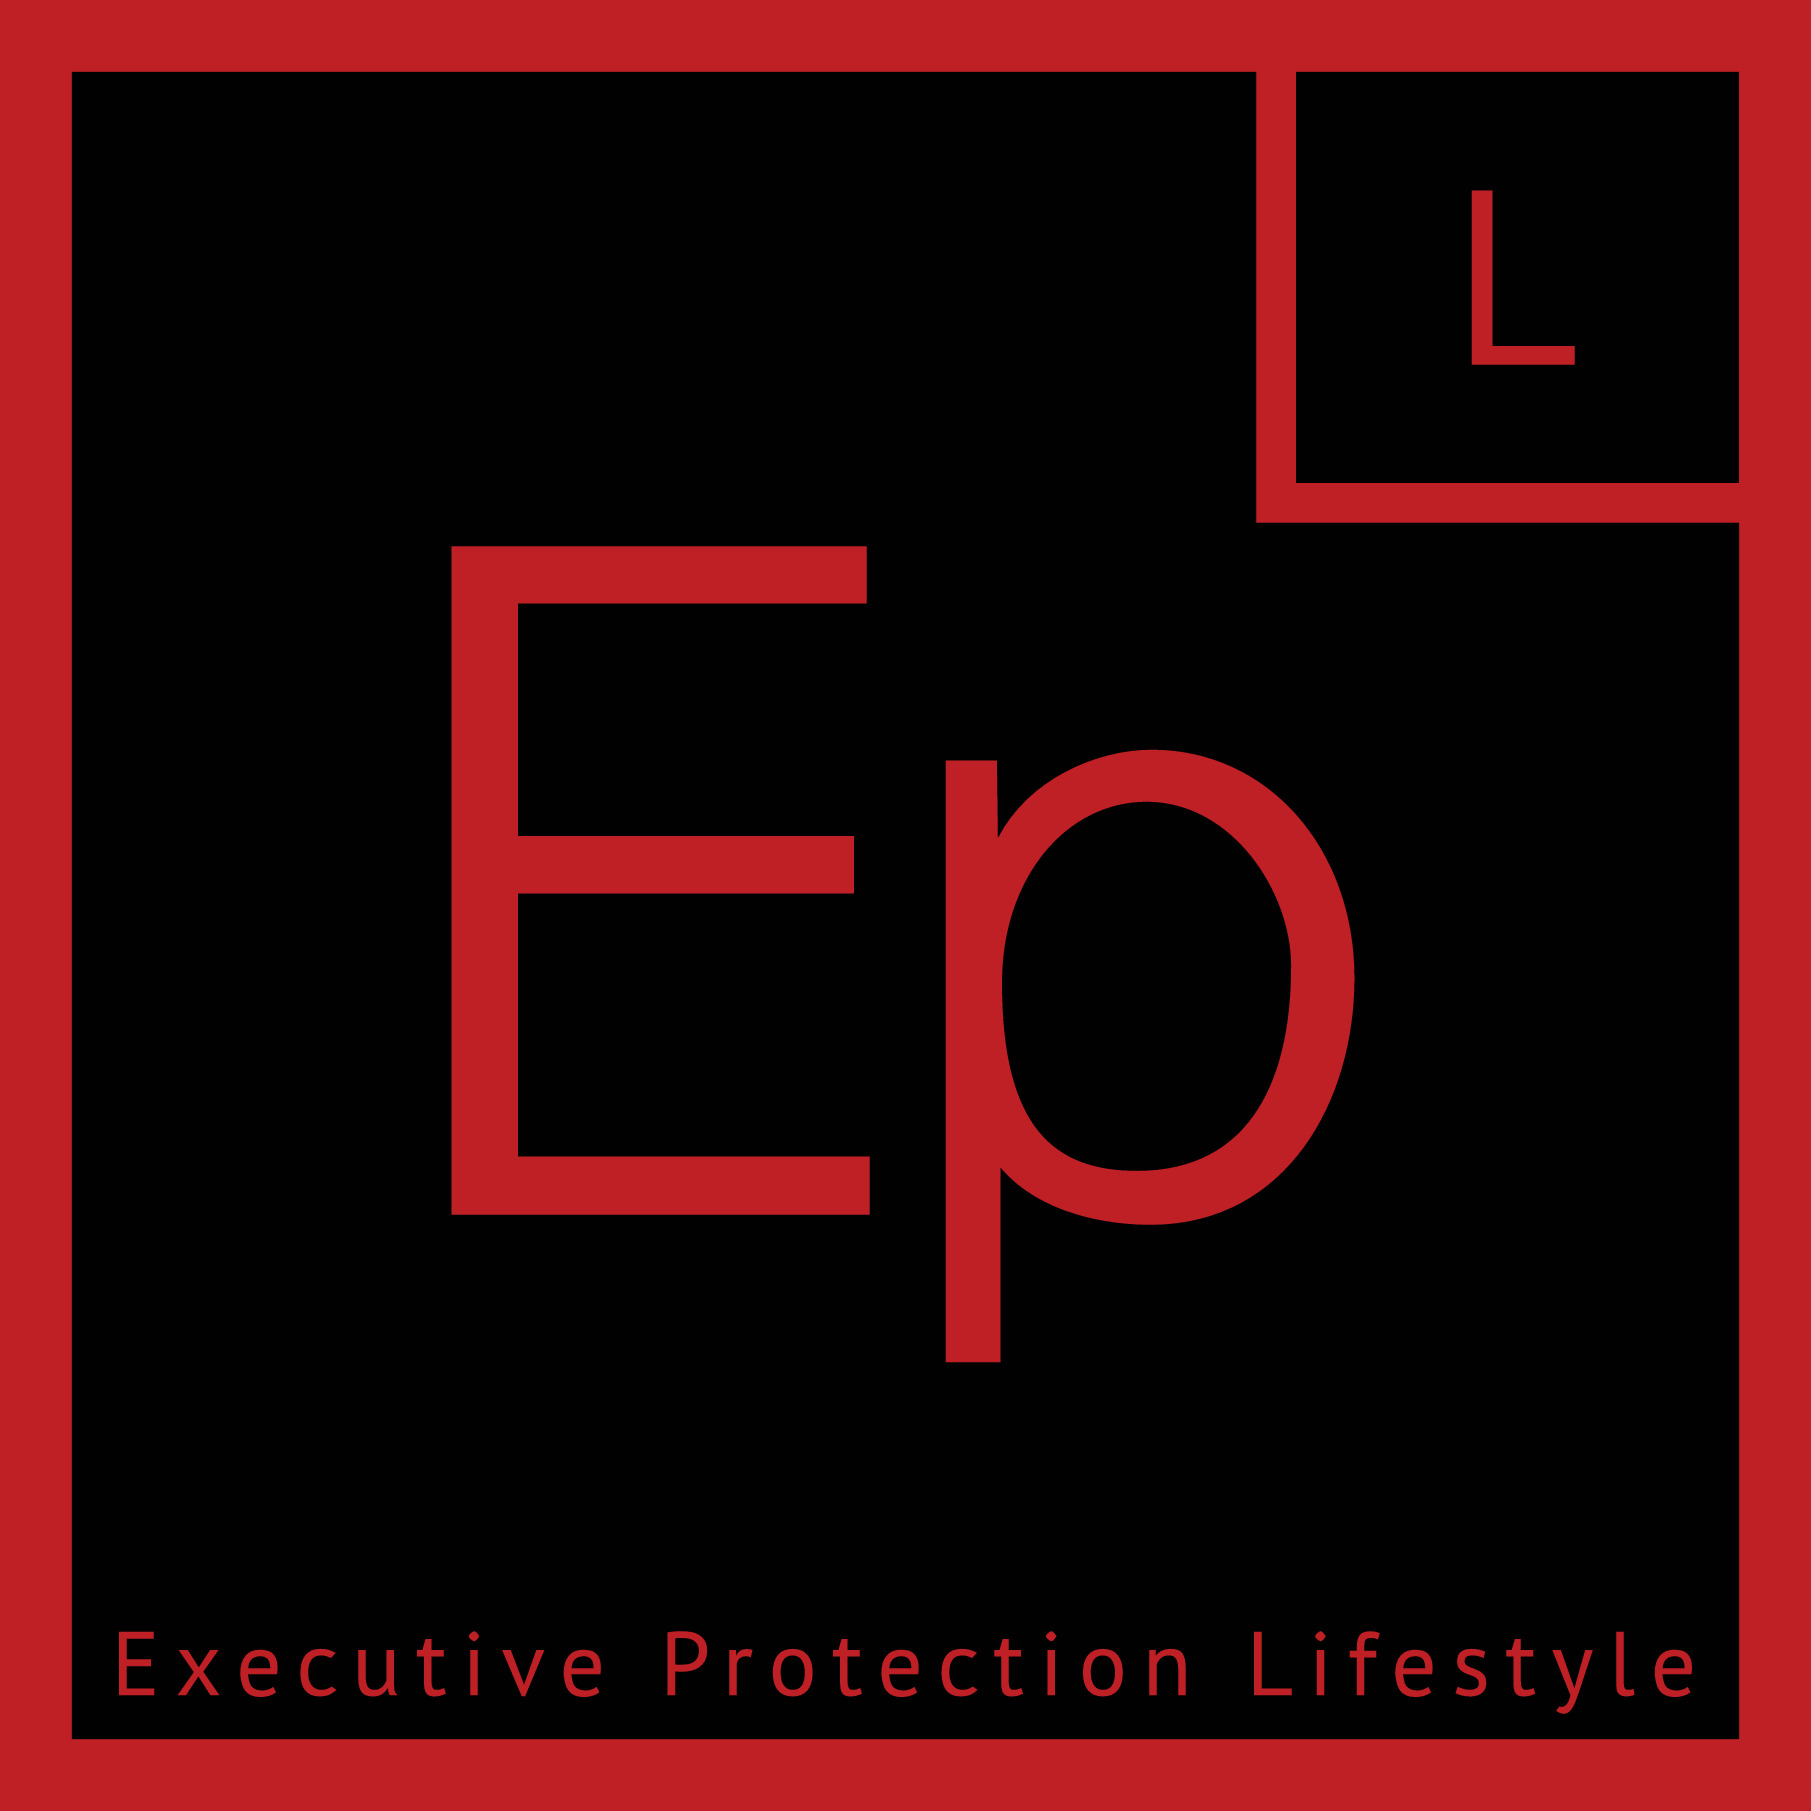 Executive Protection Lifestyle